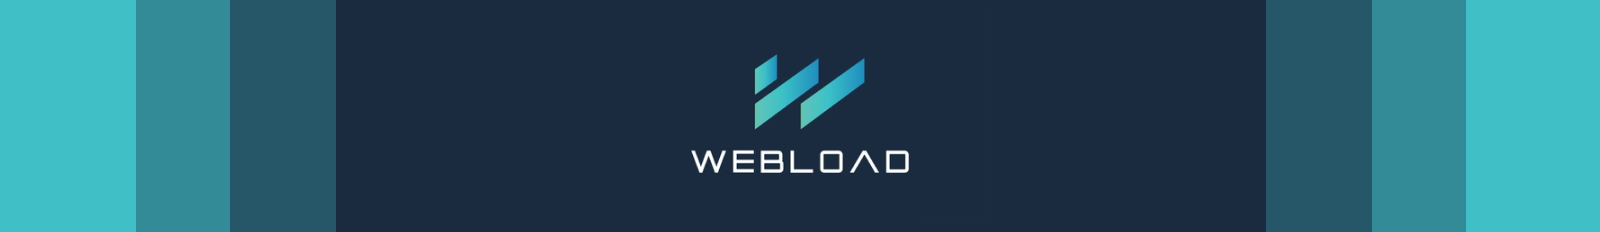 WebLoad as a leading AI-powered web testing tool